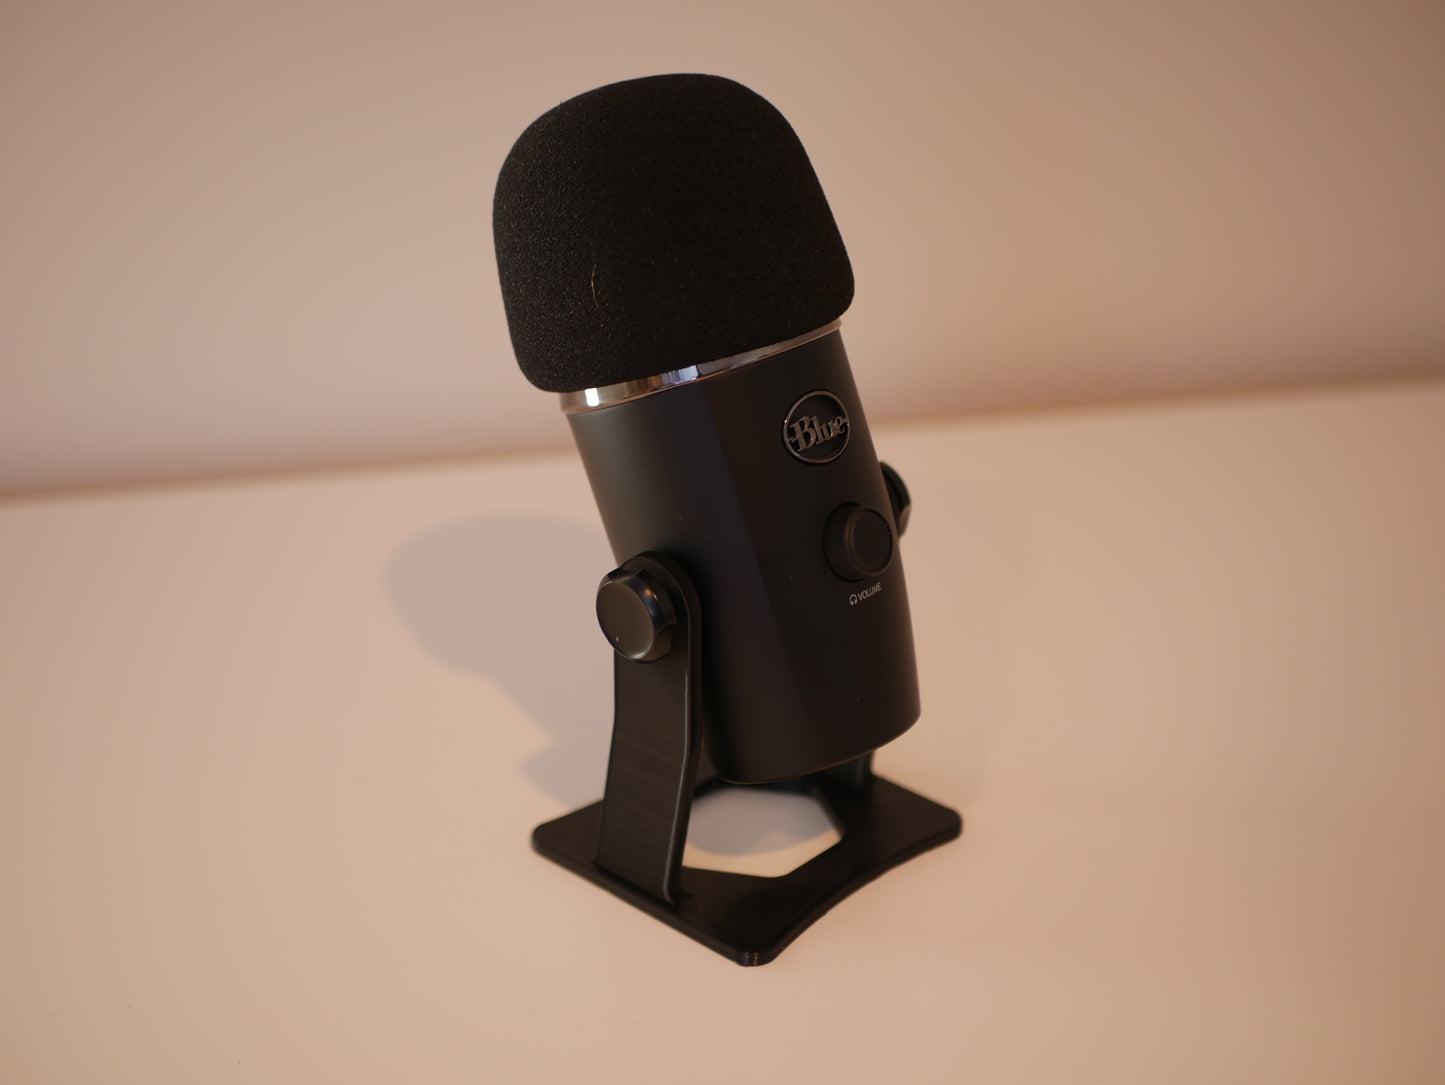 Slim Blue Yeti Microphone Desk Stand - Desk Cookies